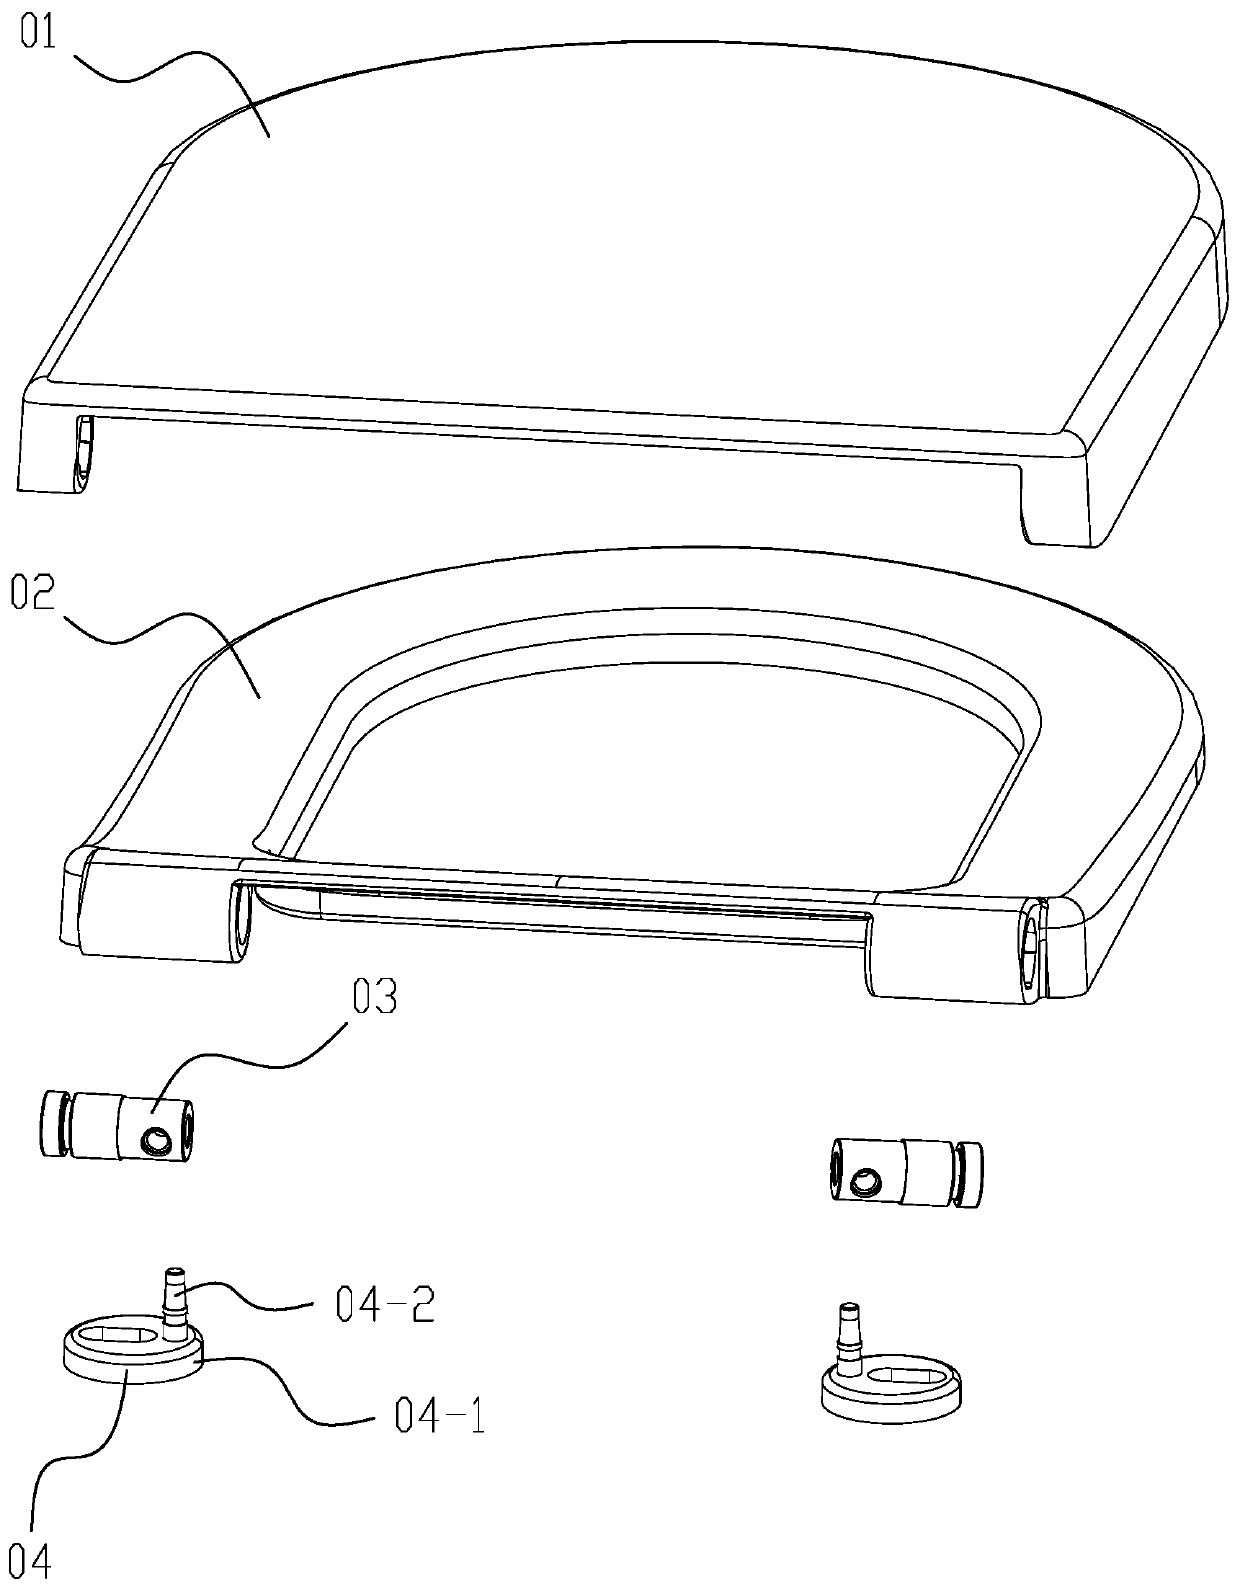 Closestool cover plate disassembling and assembling mechanism